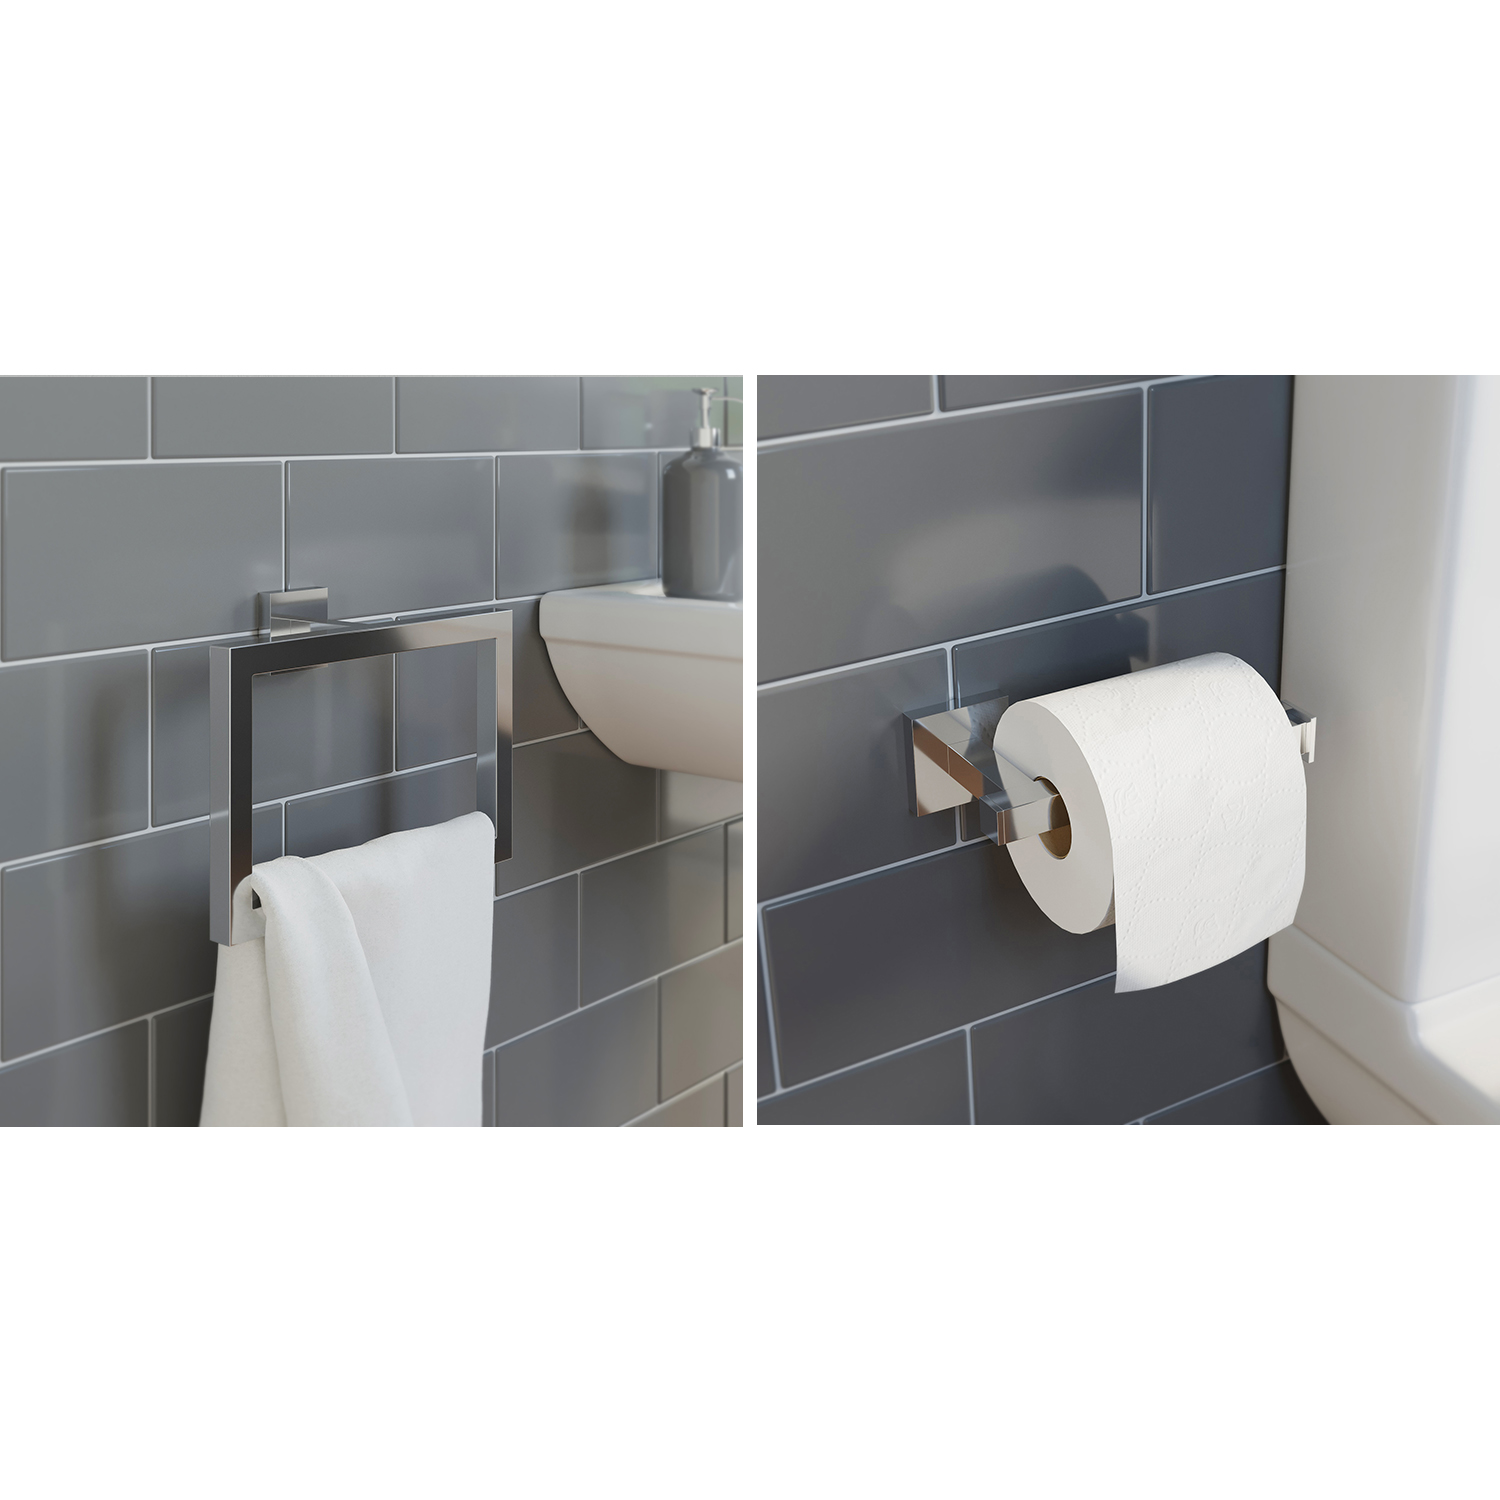 Bathroom Accessories Set Towel Ring Toilet Roll Holder ...